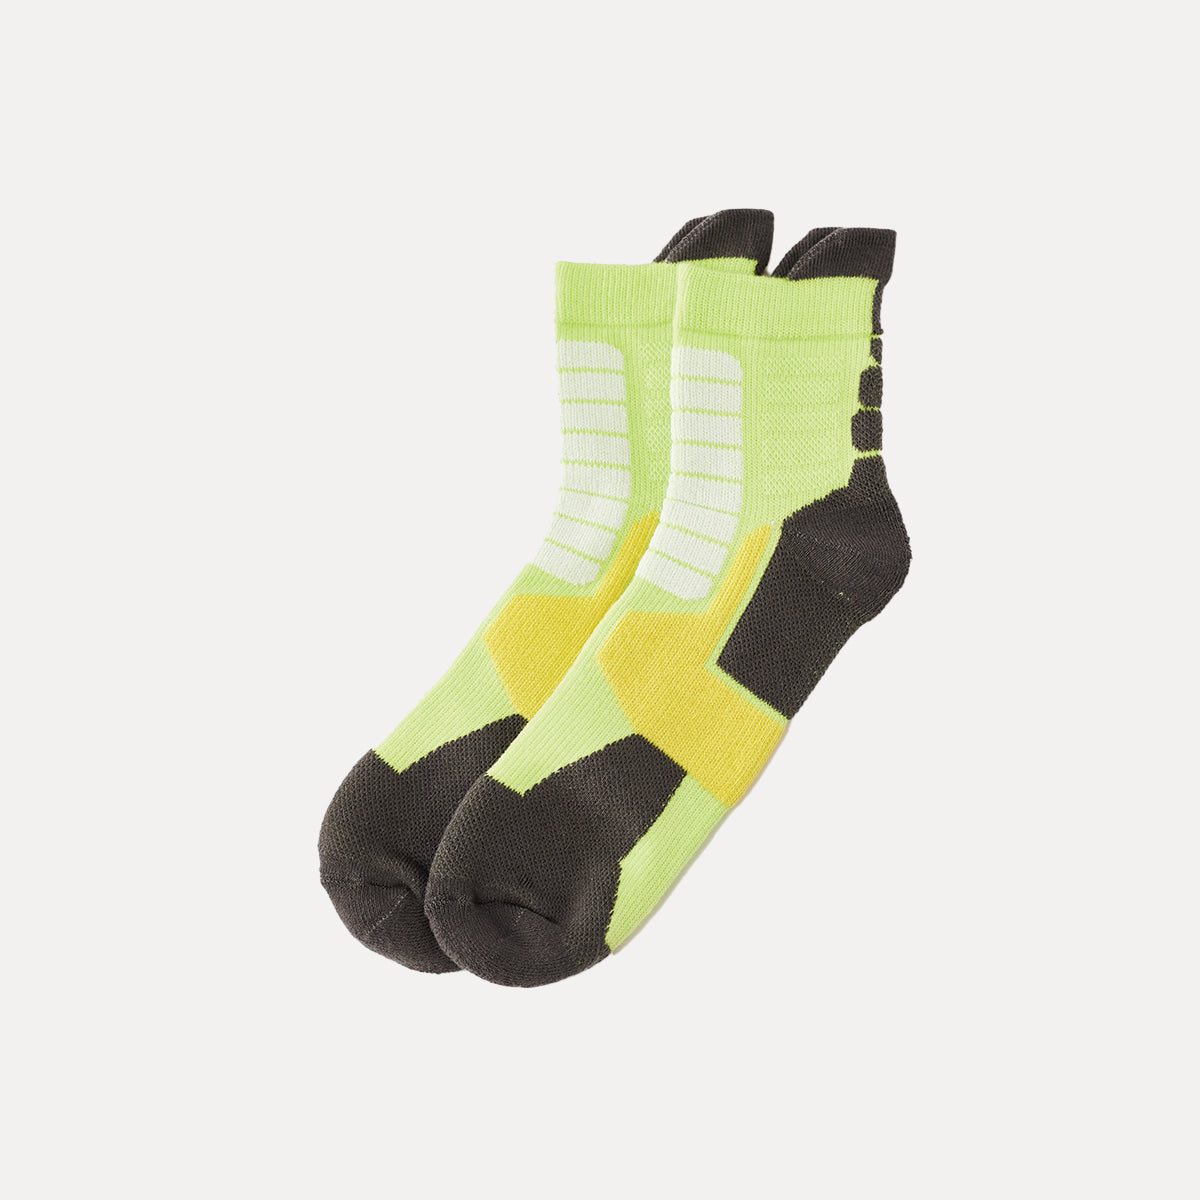 襪子 | ACTIVE 船員襪 - 綠色